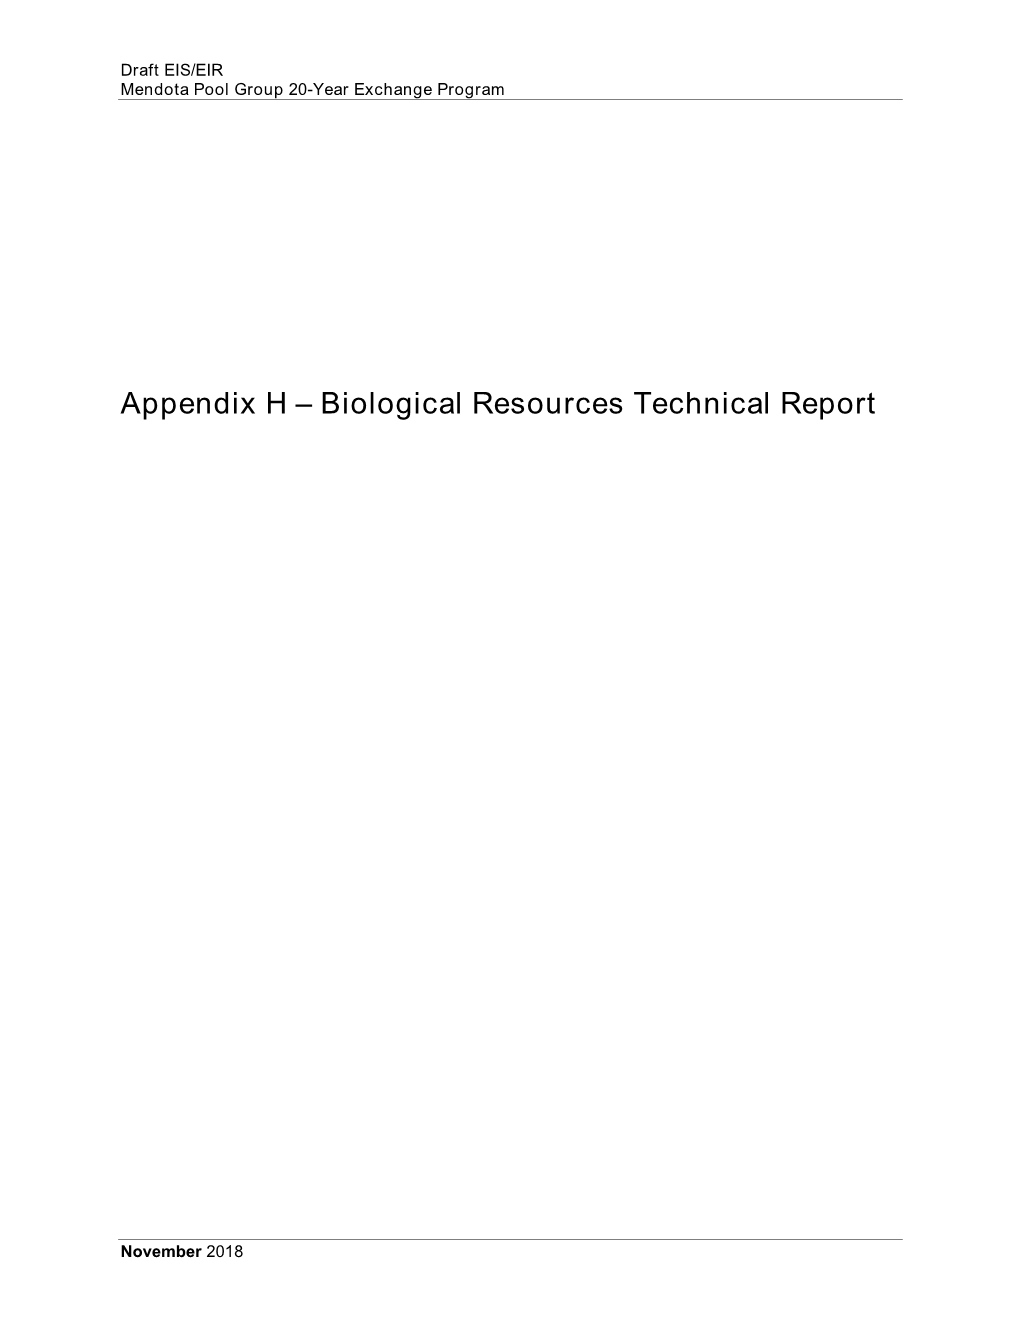 Appendix H-Biological Resources Technical Report